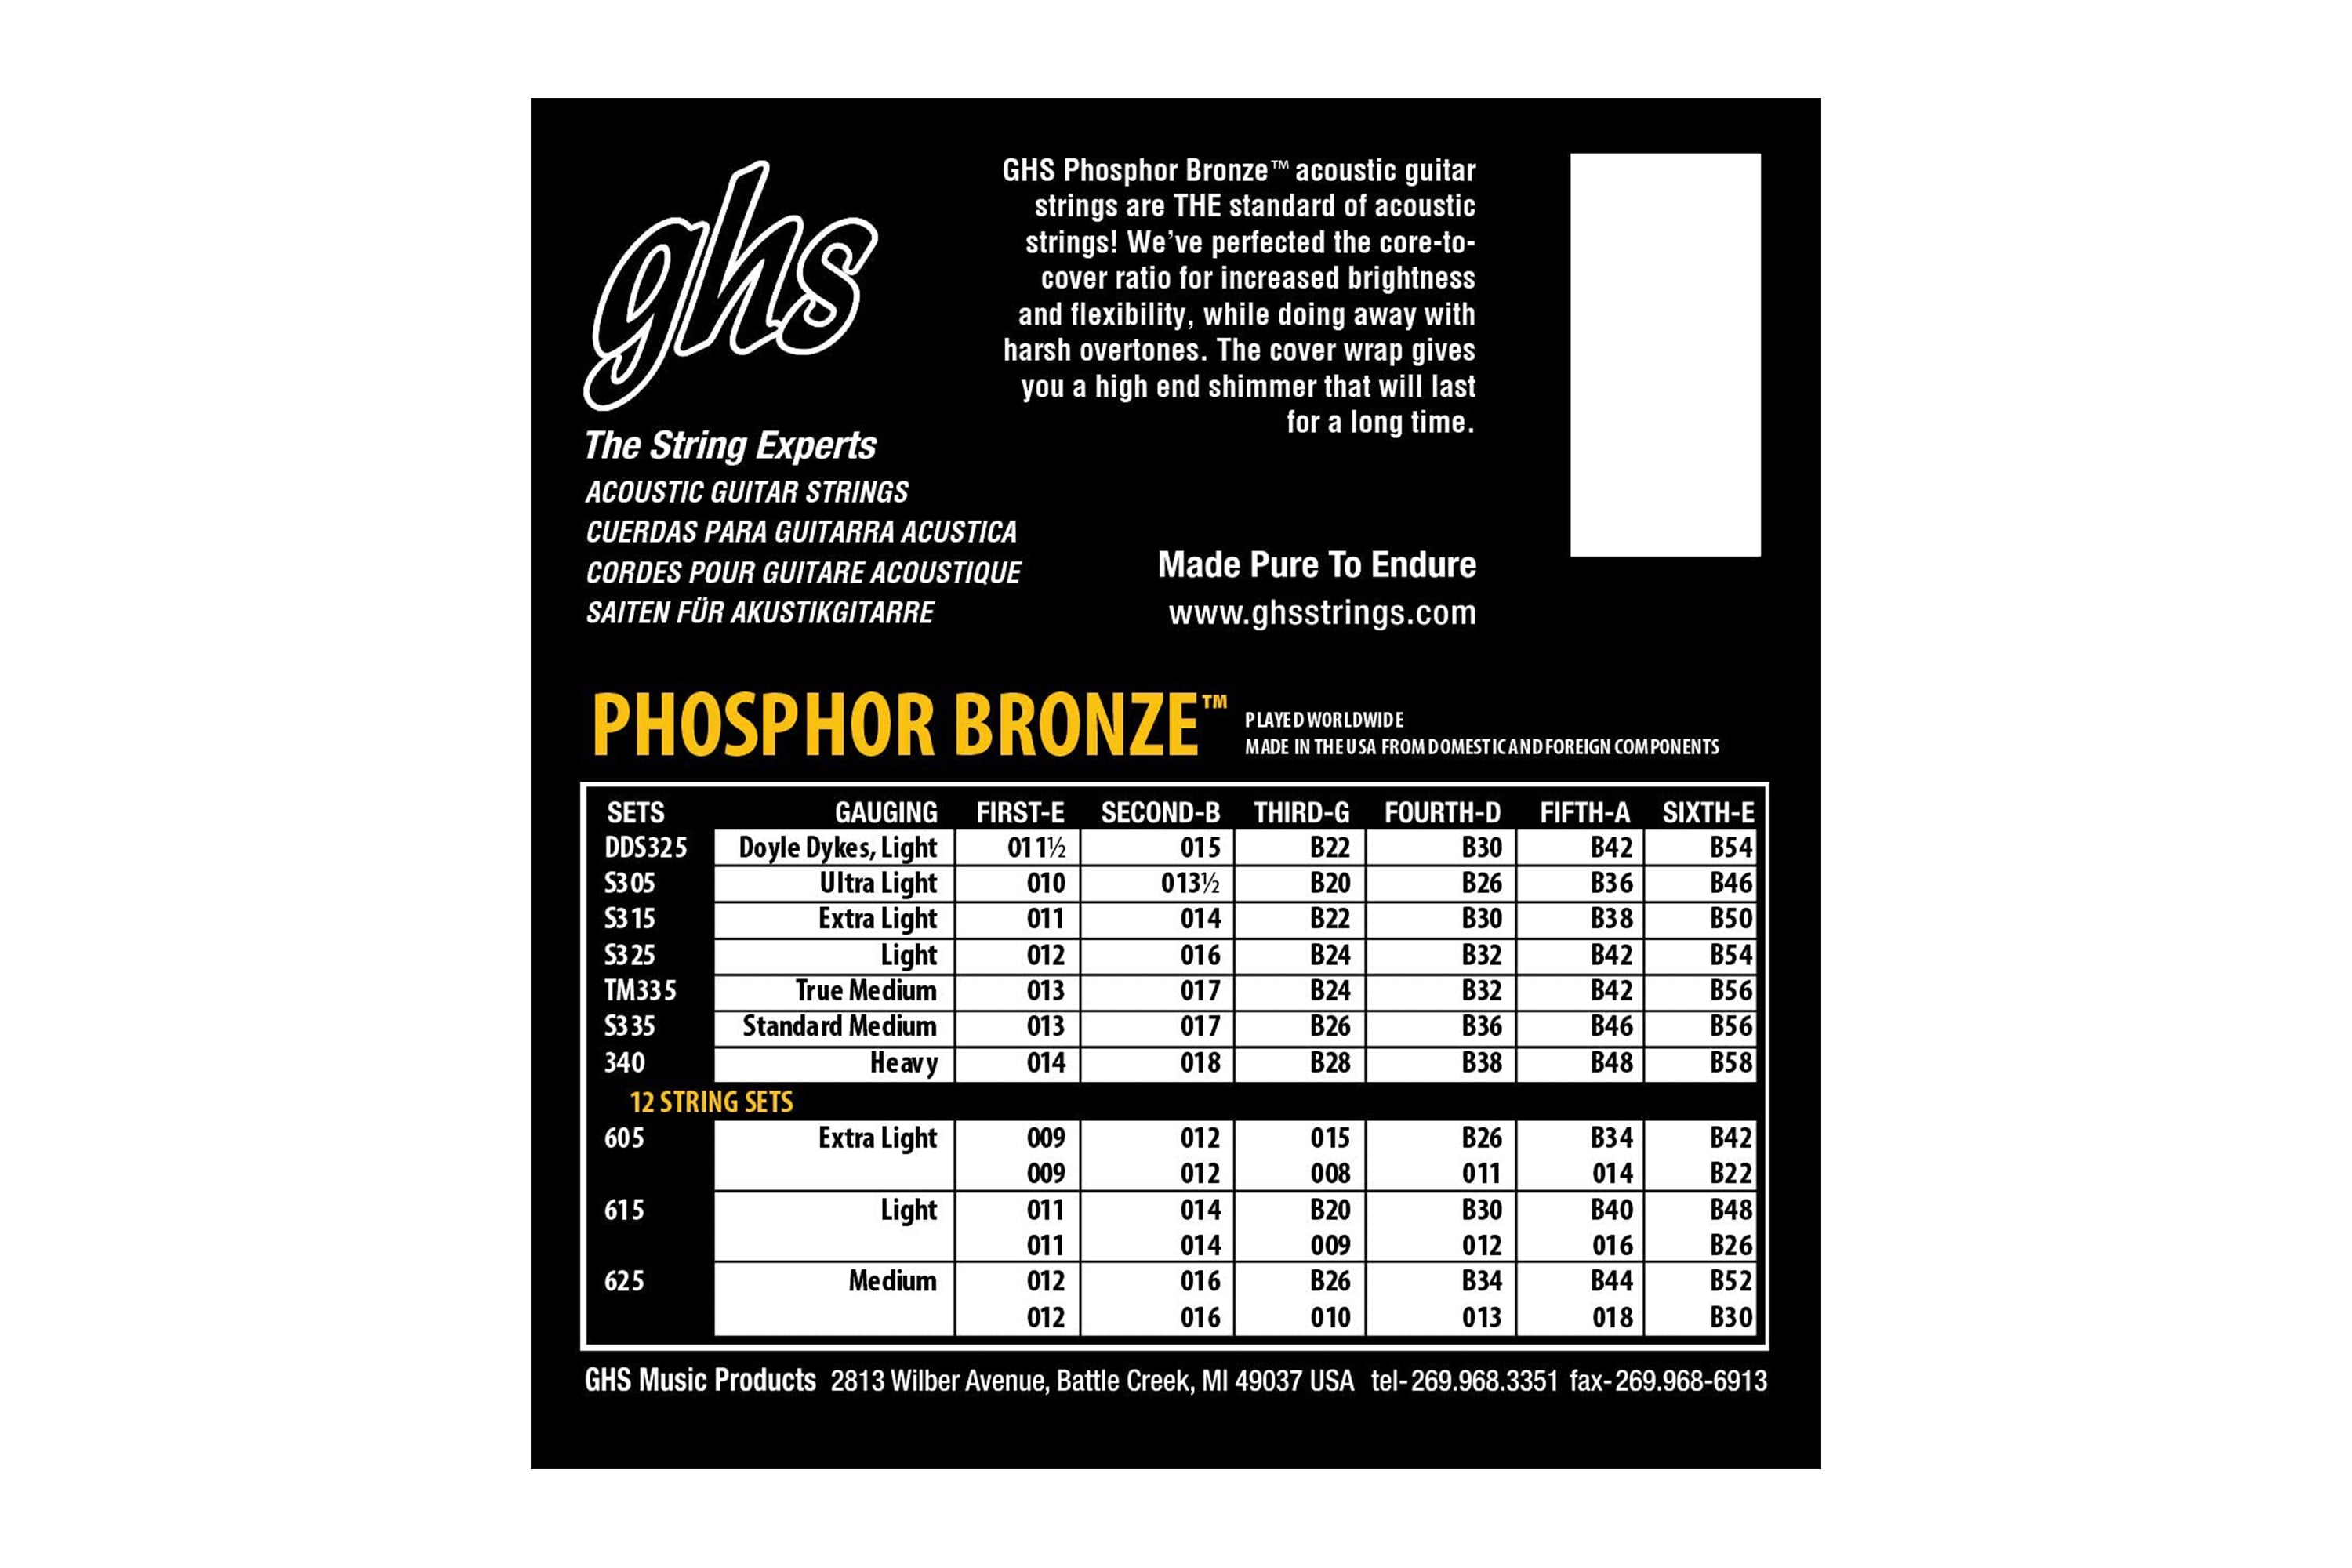 GHS S315 Phosphor Bronze Acoustic Guitar Strings - Extra Light .011-.050